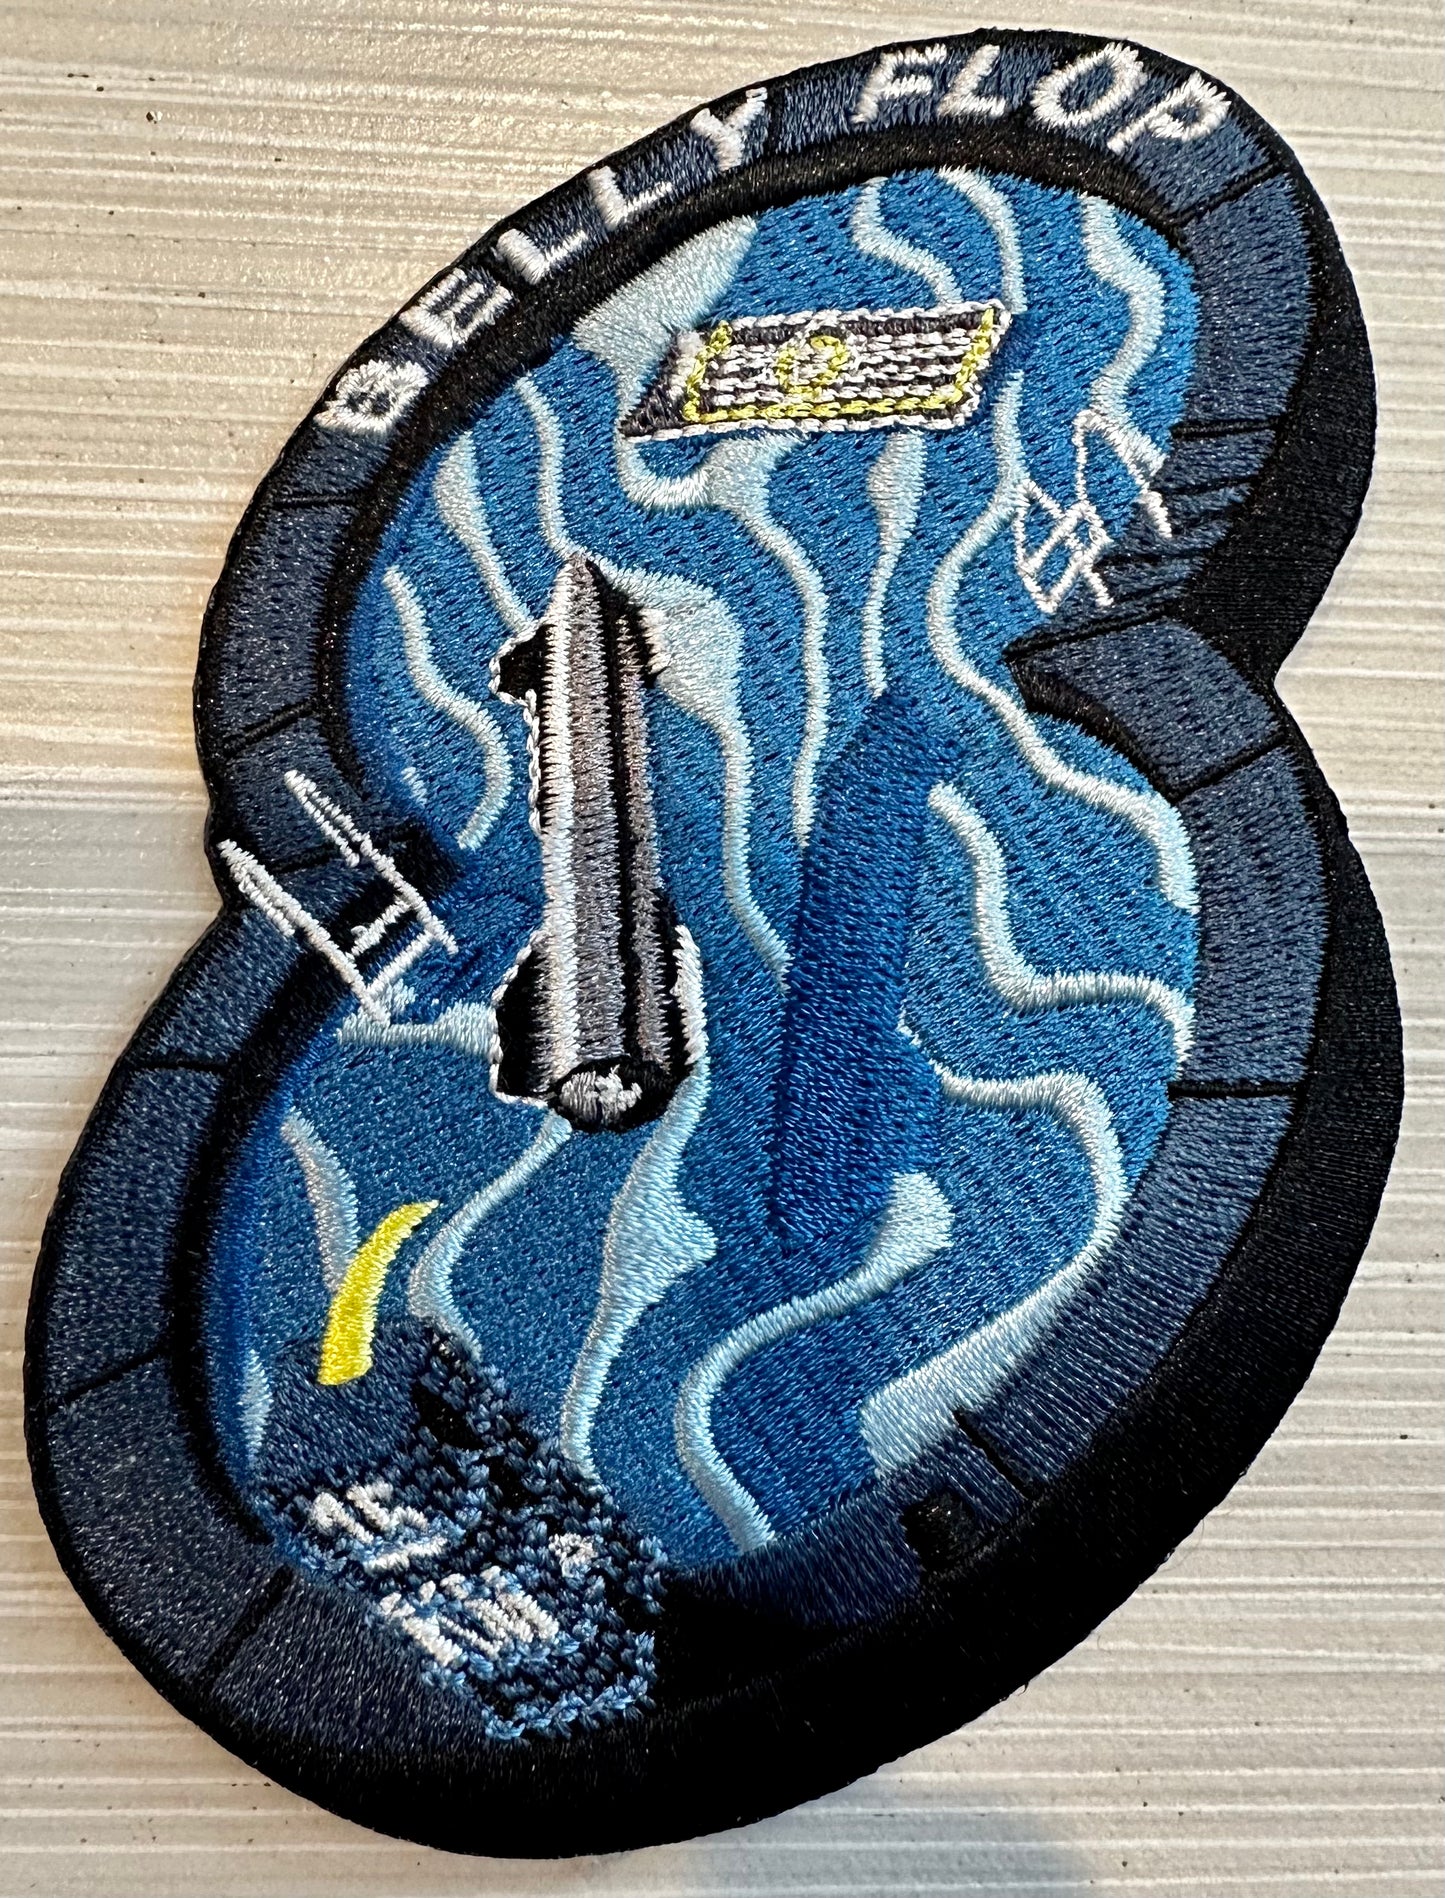 Original SpaceX Starship Bellyflop Test Flight Internal Mission Patch 3.5” Starbase Texas